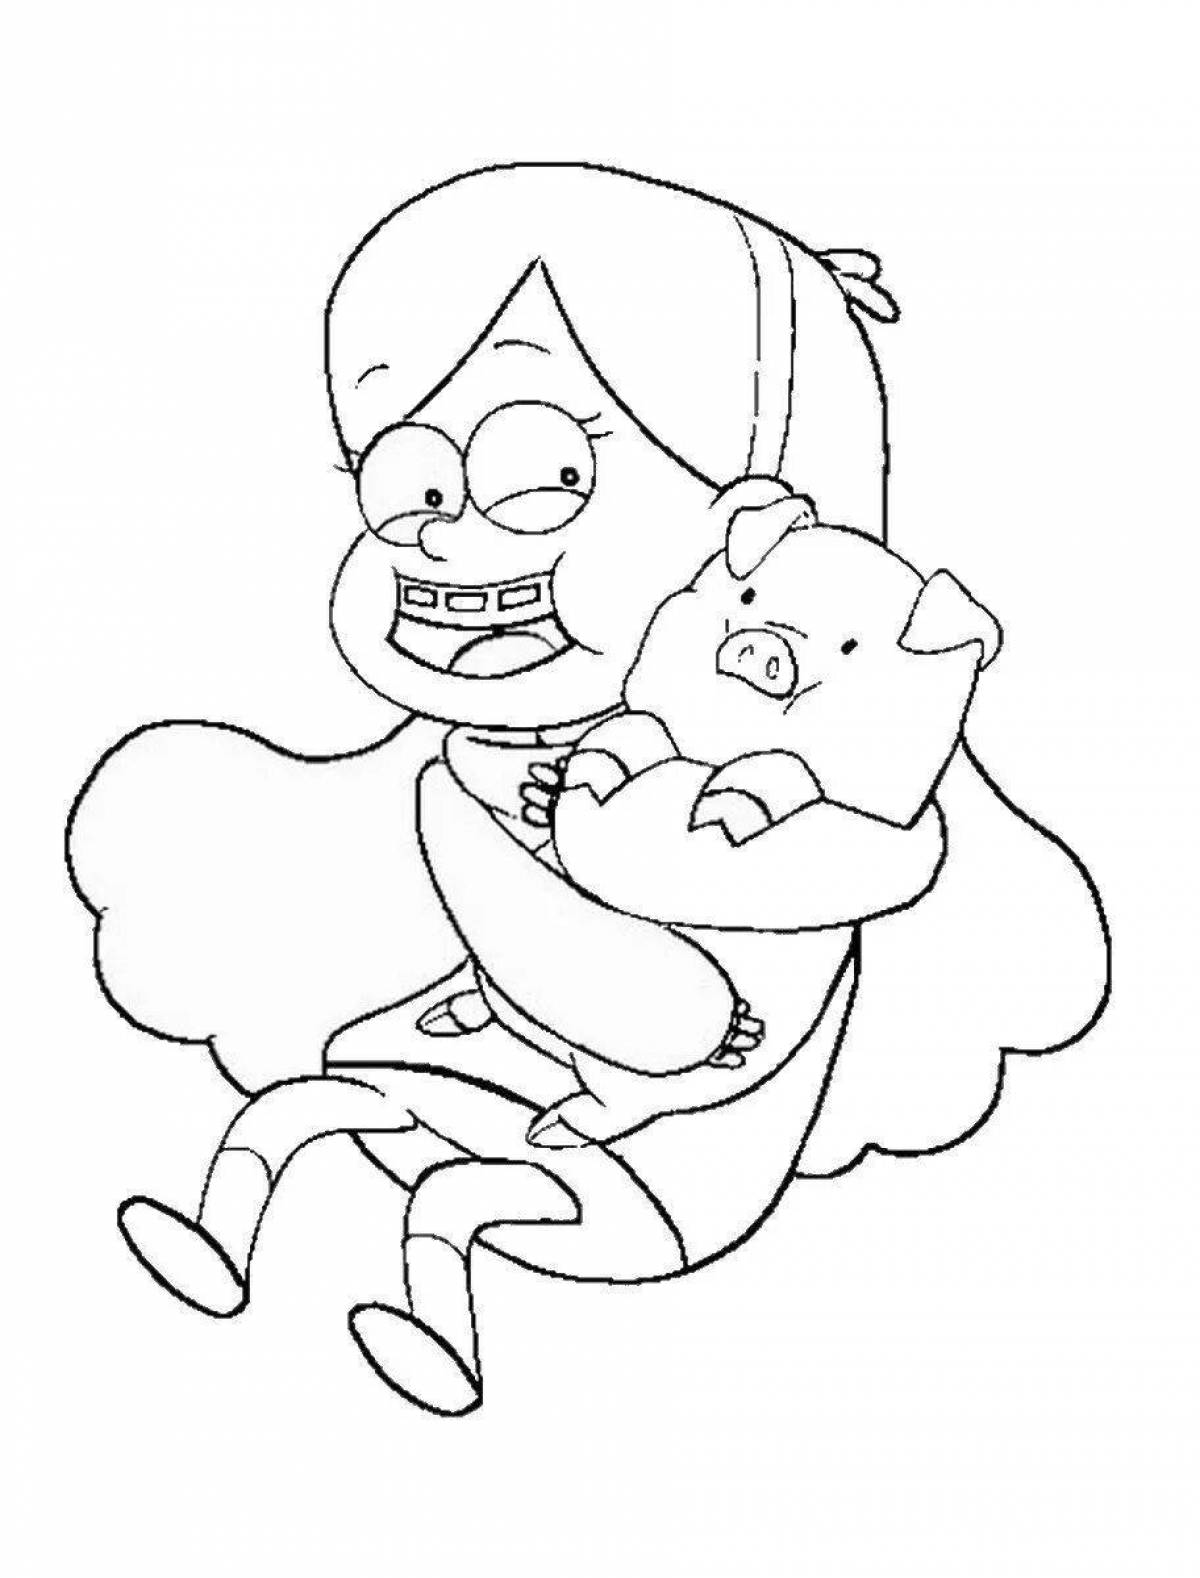 Mabel's fun coloring from gravity falls